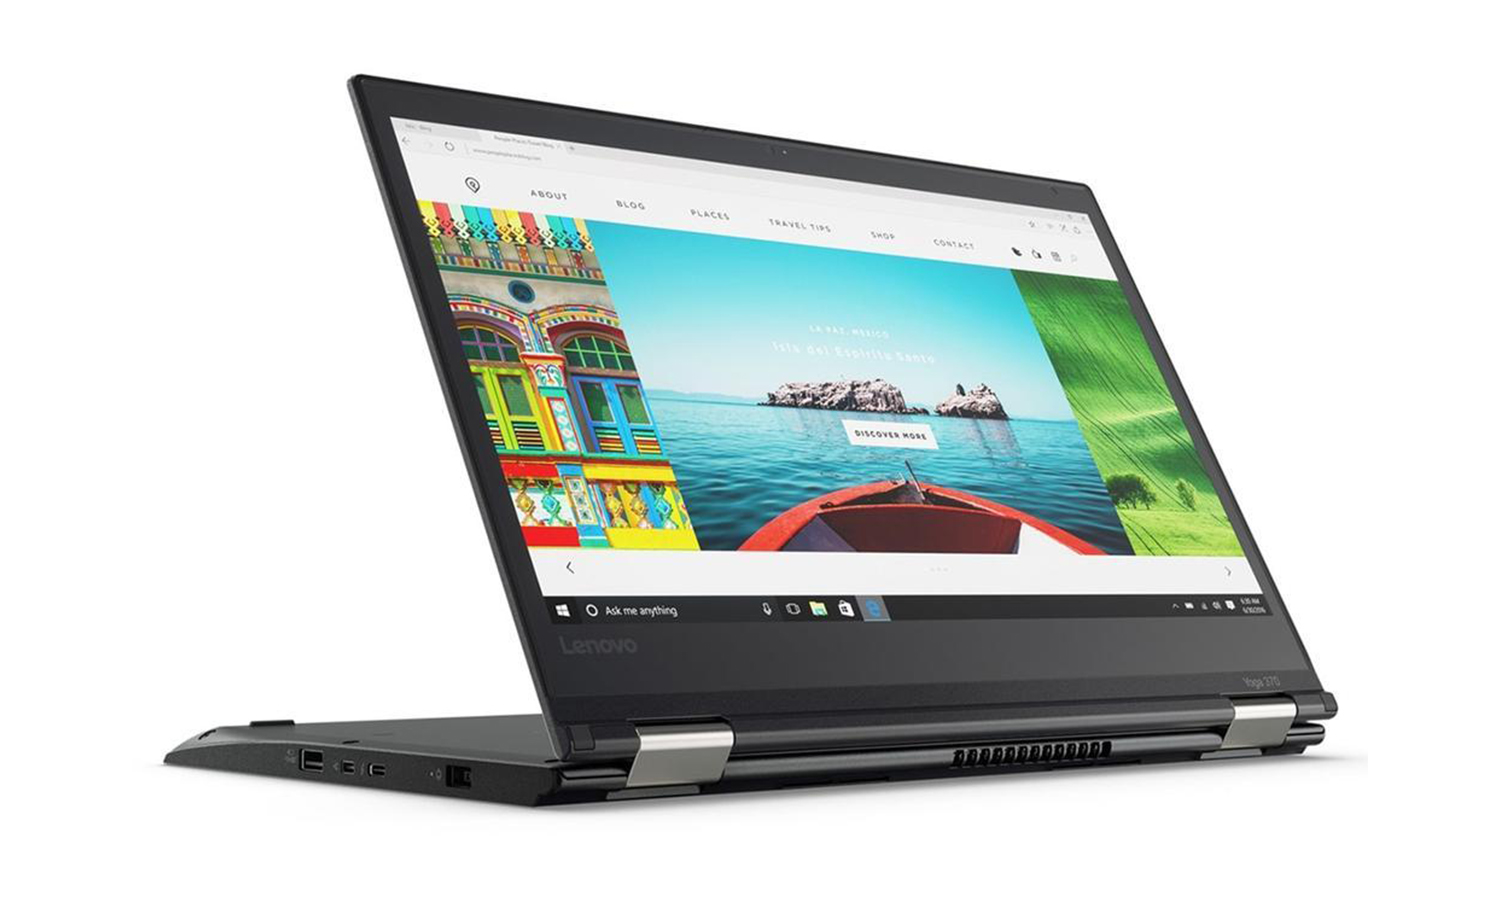 Lenovo ThinkPad Yoga 370 Intel Core i7 7th Gen 8GB RAM 256GB SSD Touchscreen Windows 10